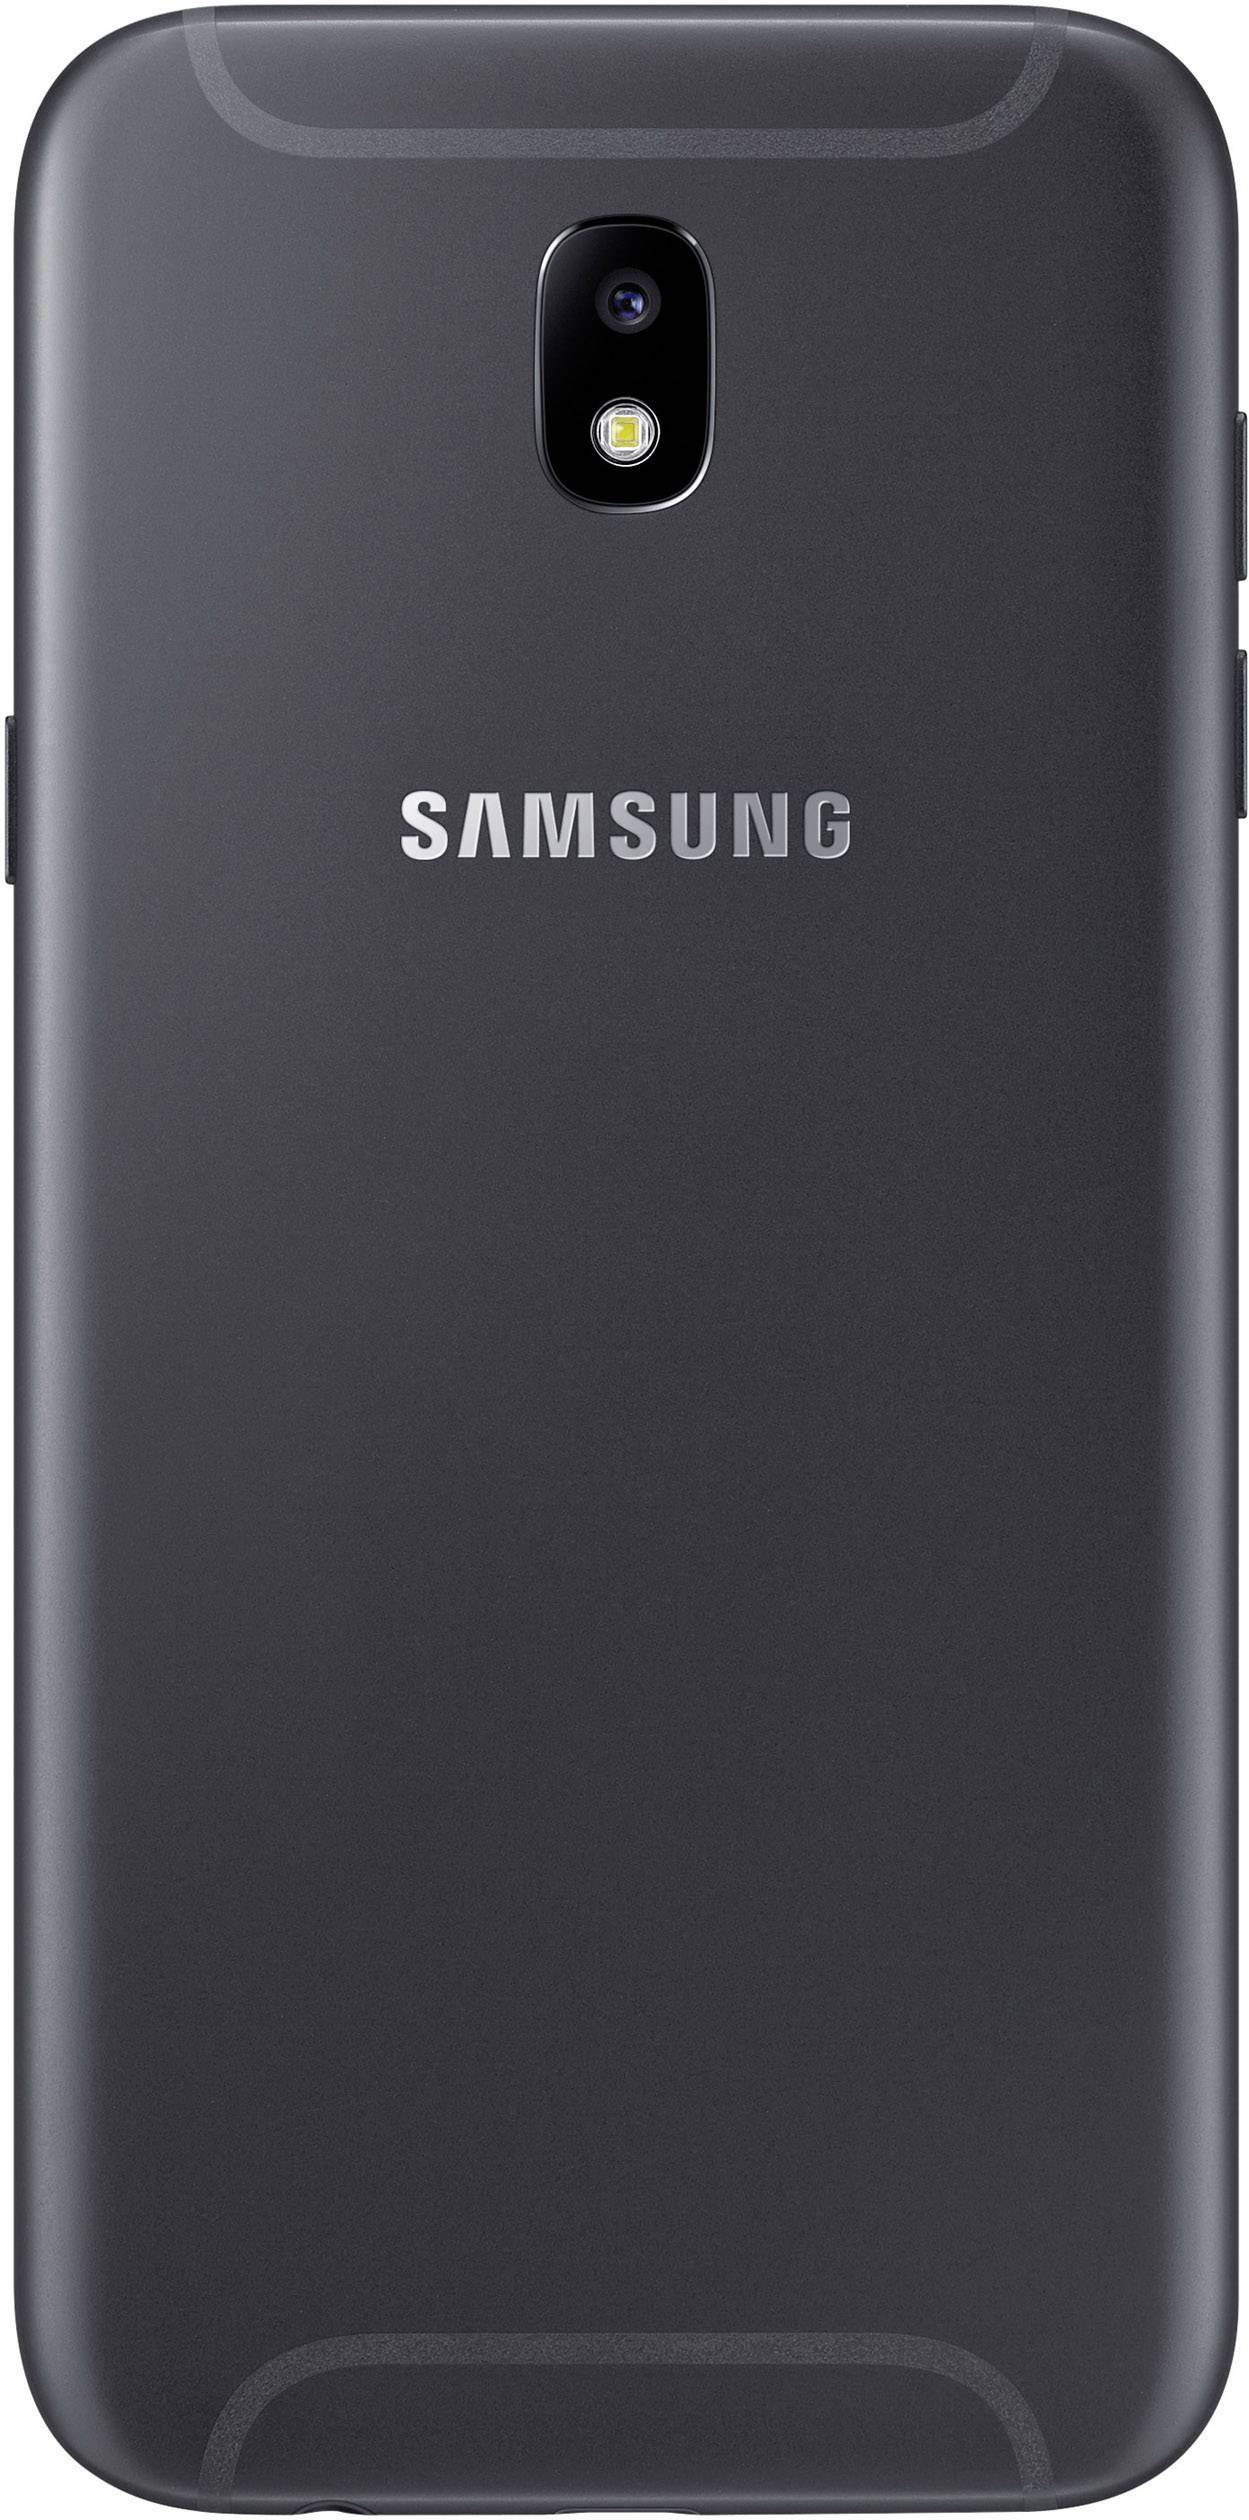 Samsung Galaxy J5 (2017) Duos Dual SIM Black |